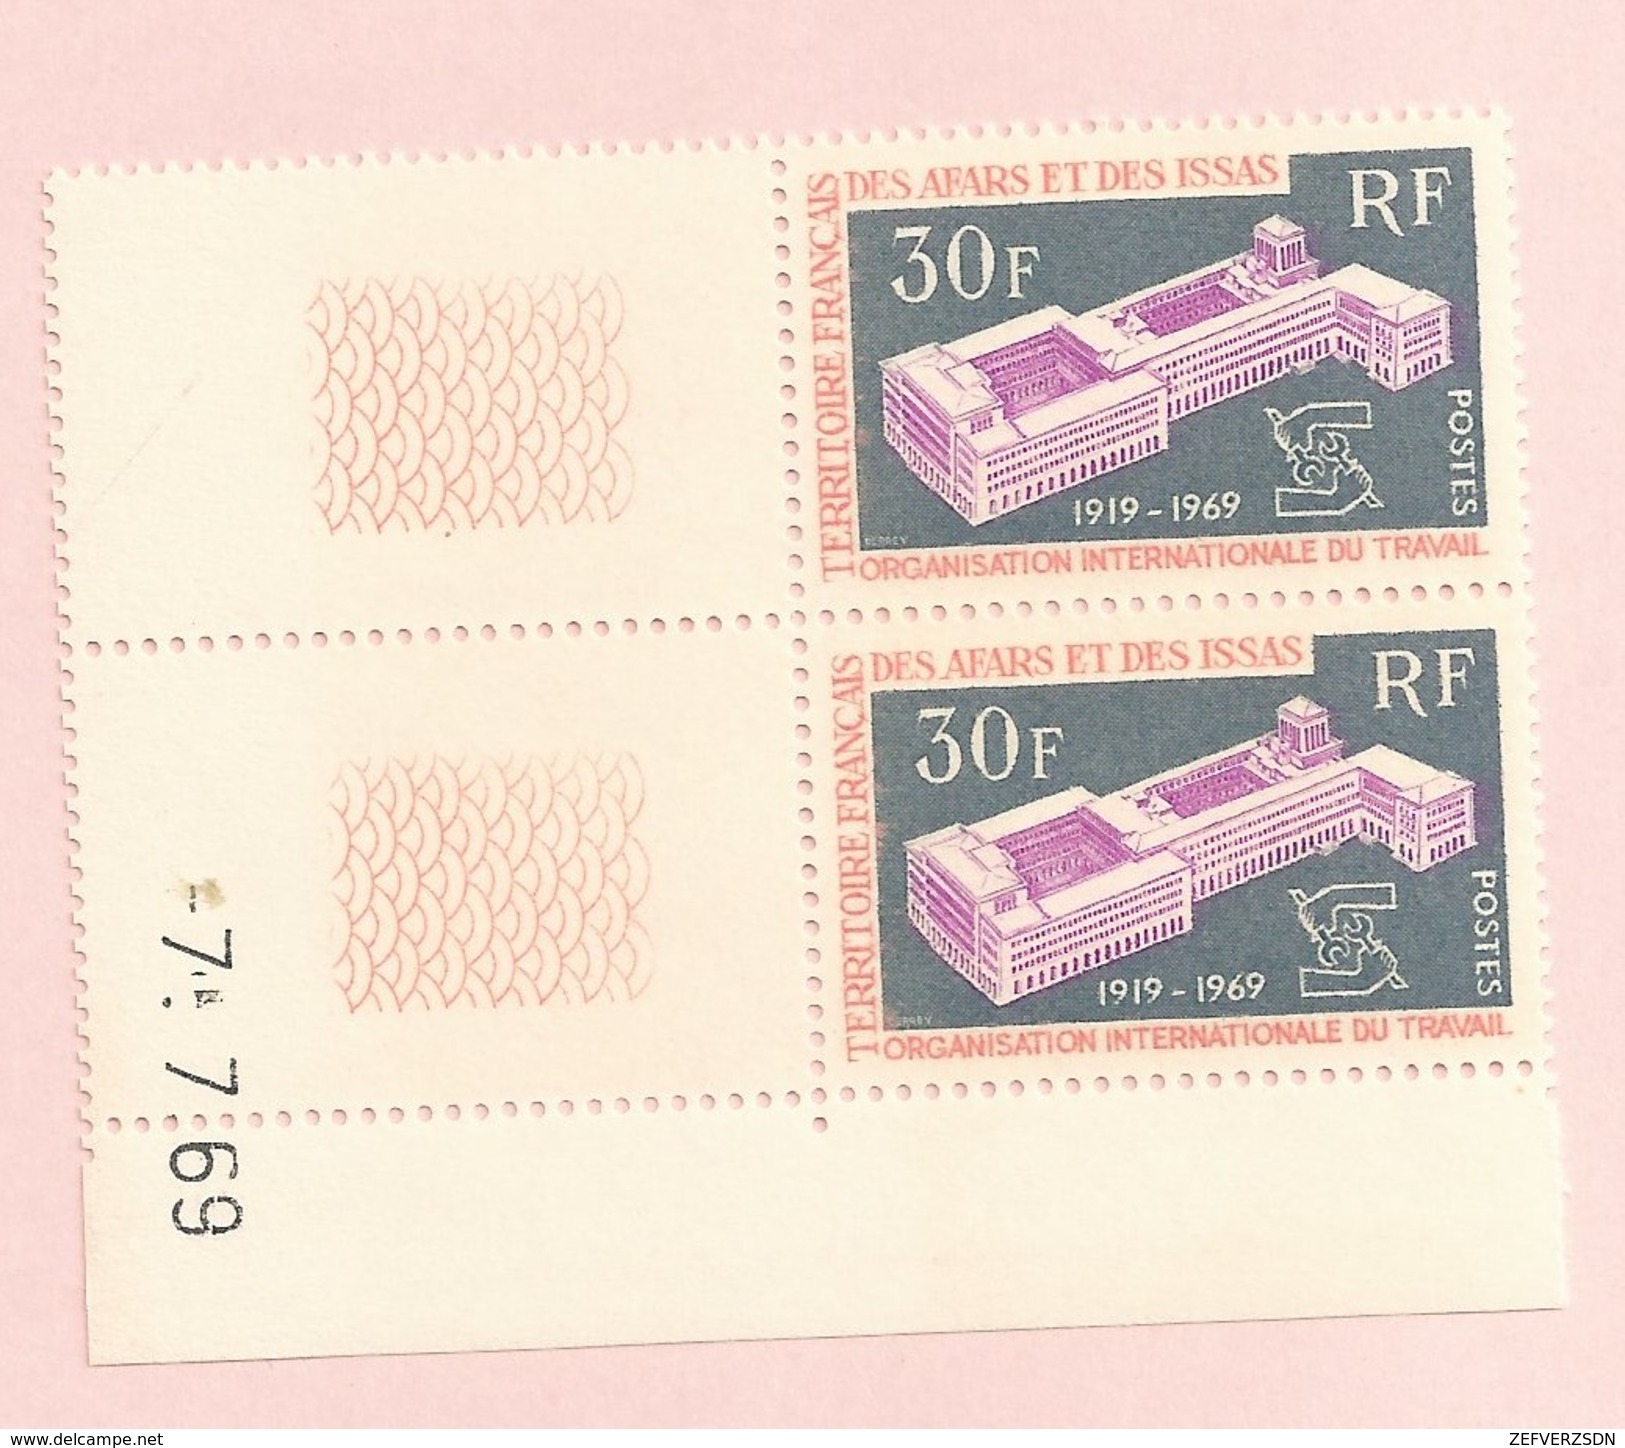 ORGANISATION INTERNATIONALE DU TRAVAIL BLOC COINS COIN DATES DATE AFFARS ET ISSAS - Unused Stamps